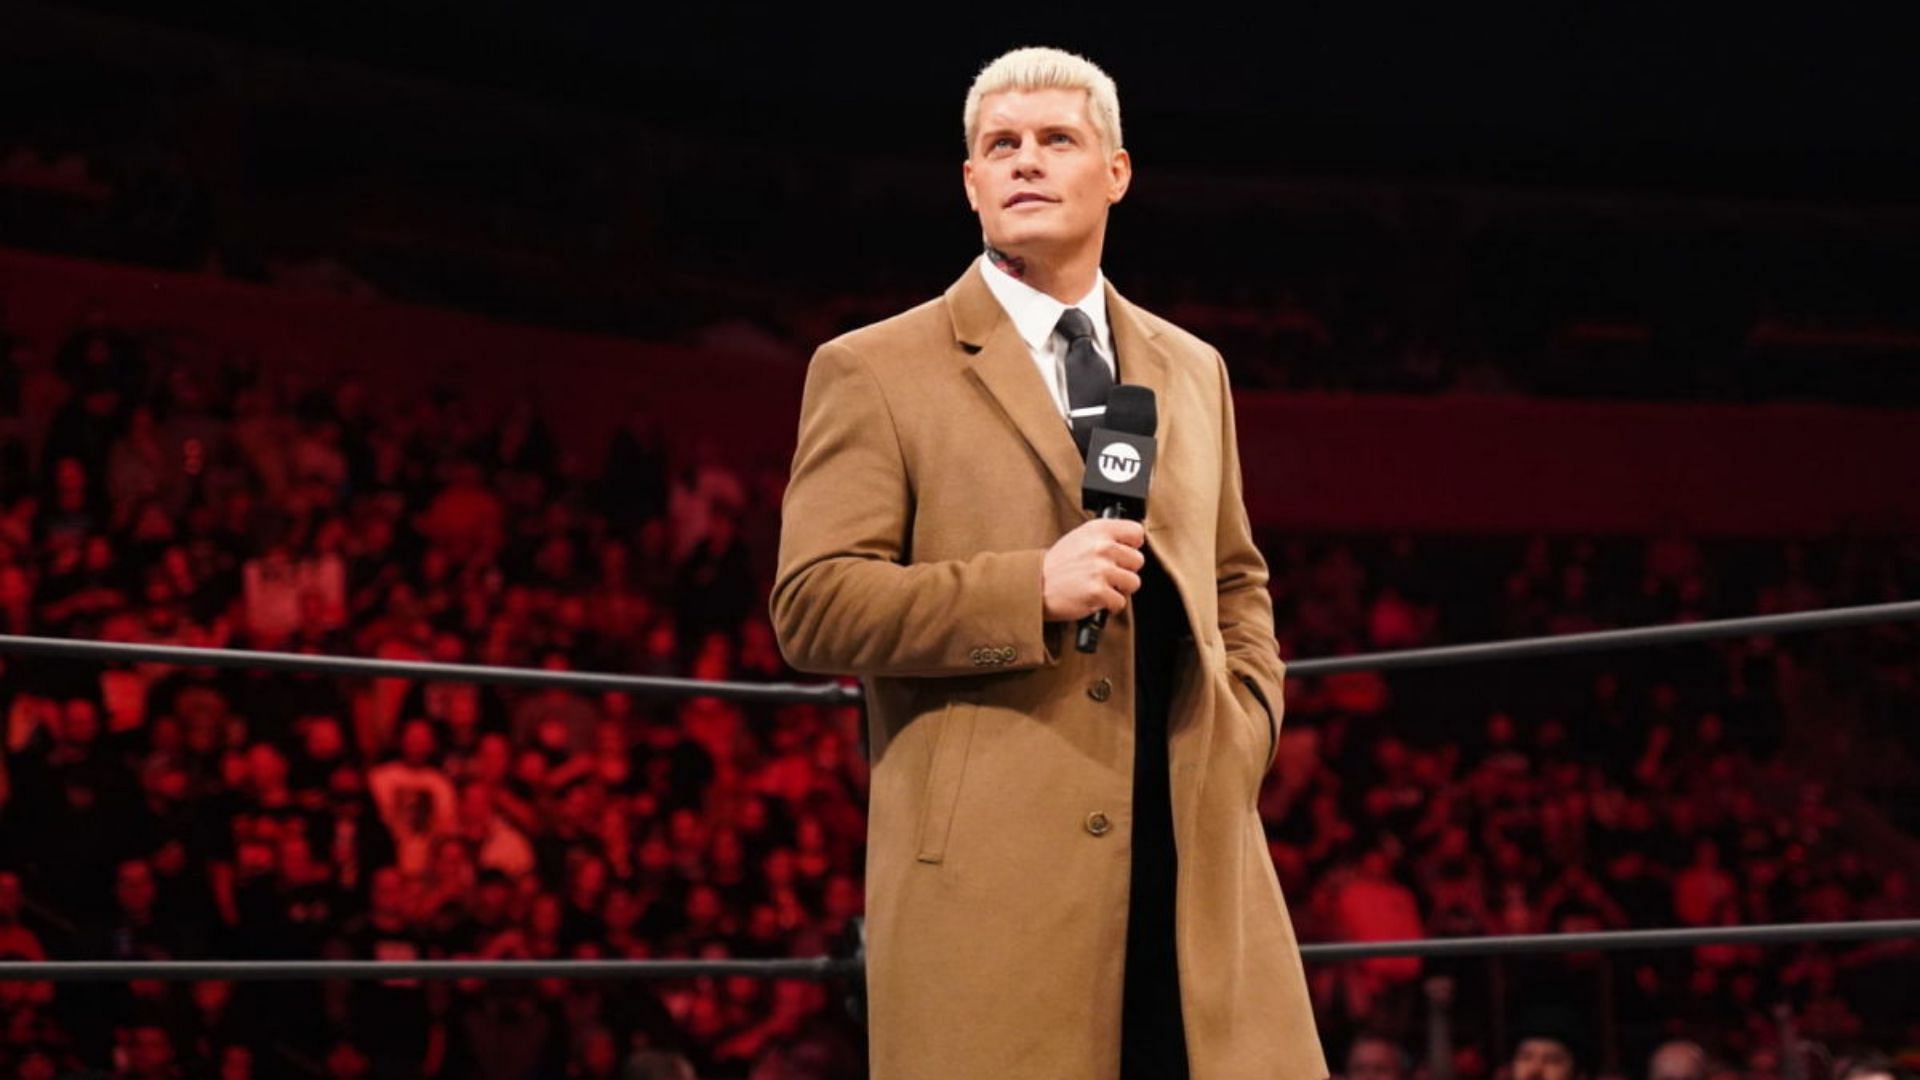 Cody Rhodes in an AEW ring in 2020